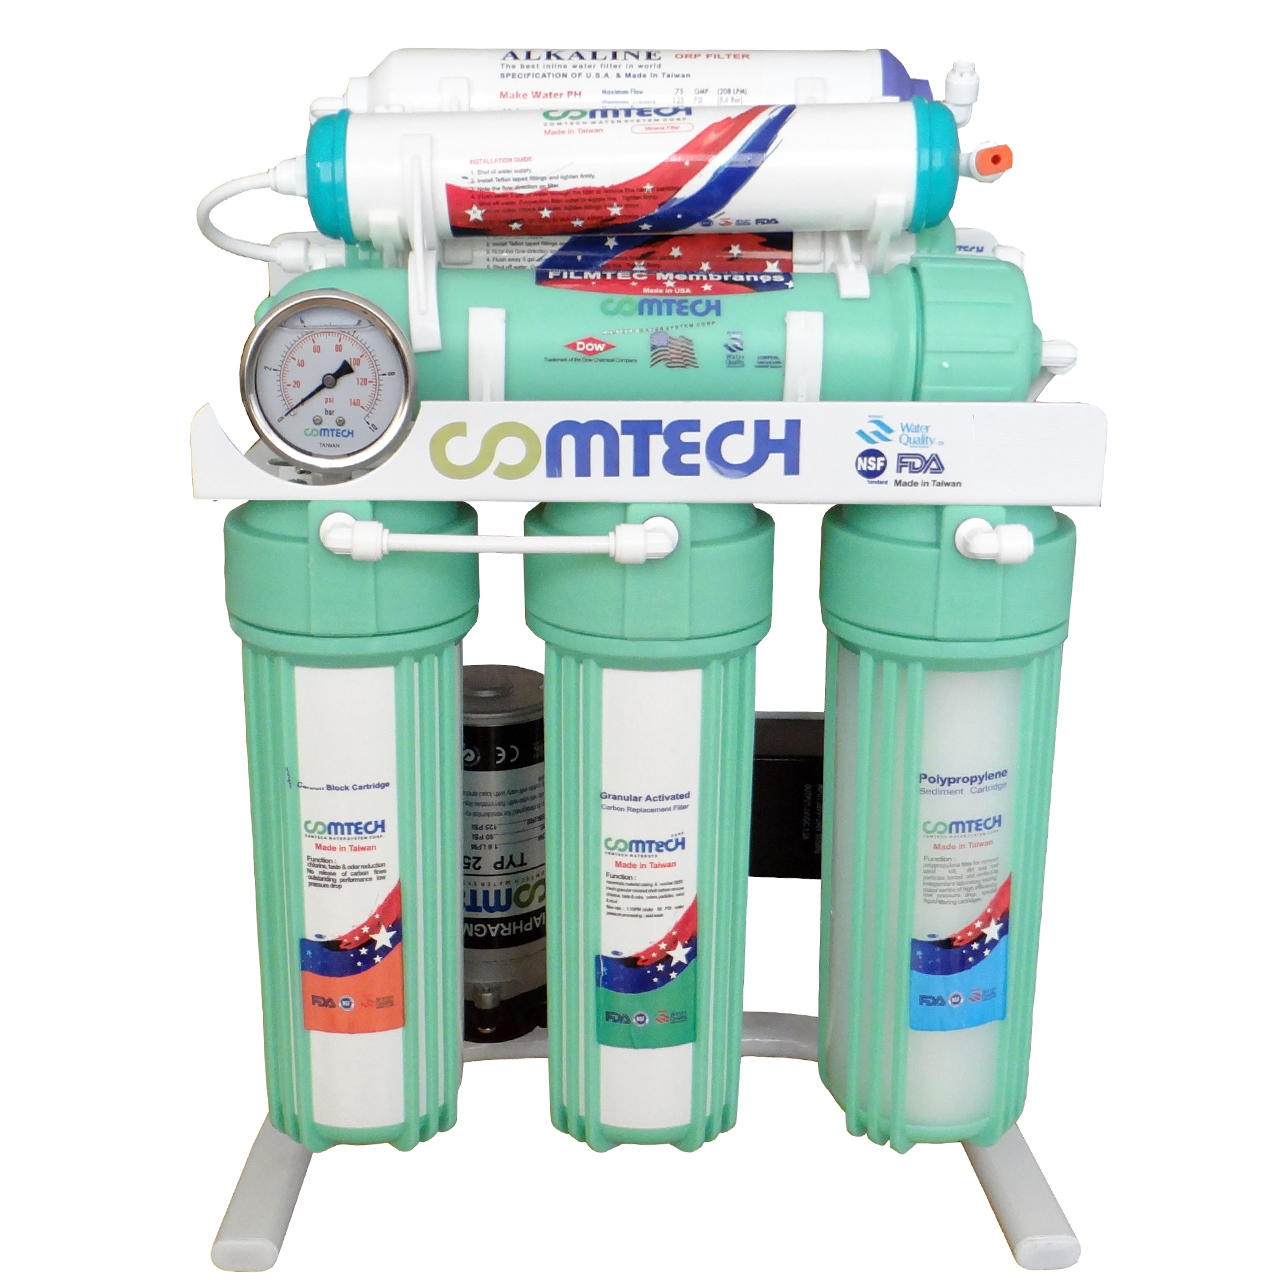 تصفیه آب خانگی کامتک RO7-COMTECH-9300